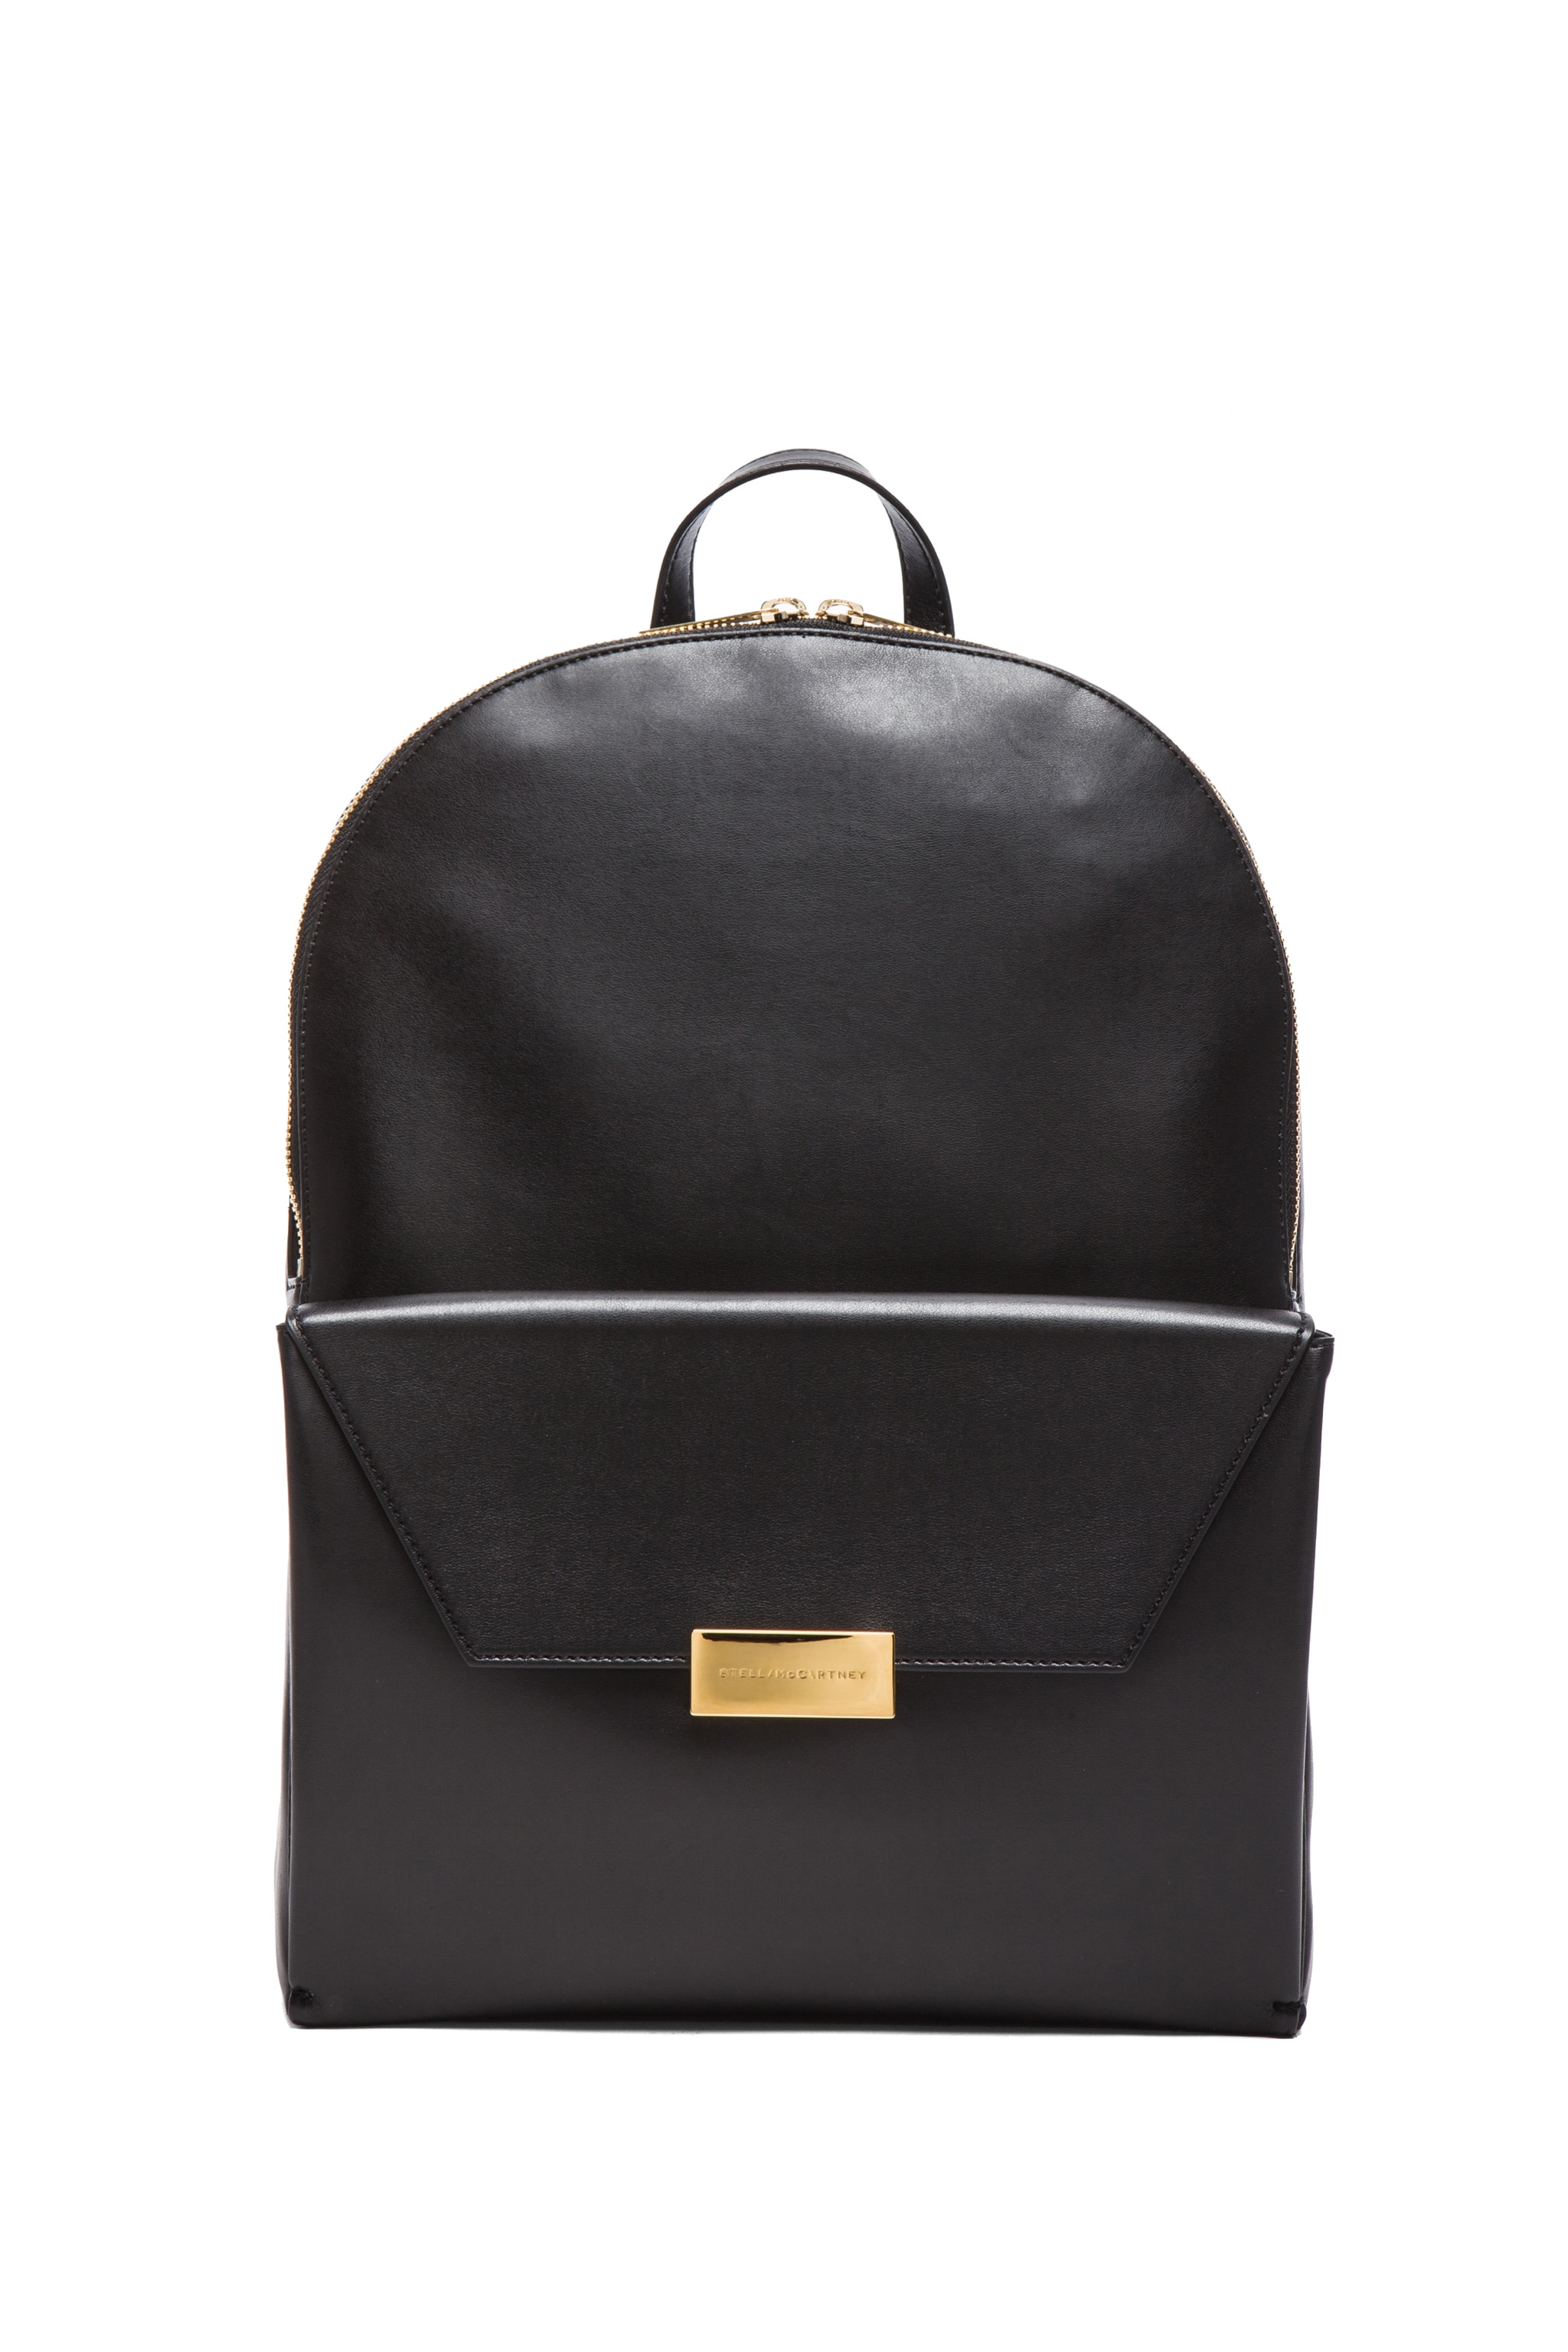 Image 1 of Stella McCartney Eco Rucksack Backpack in Black